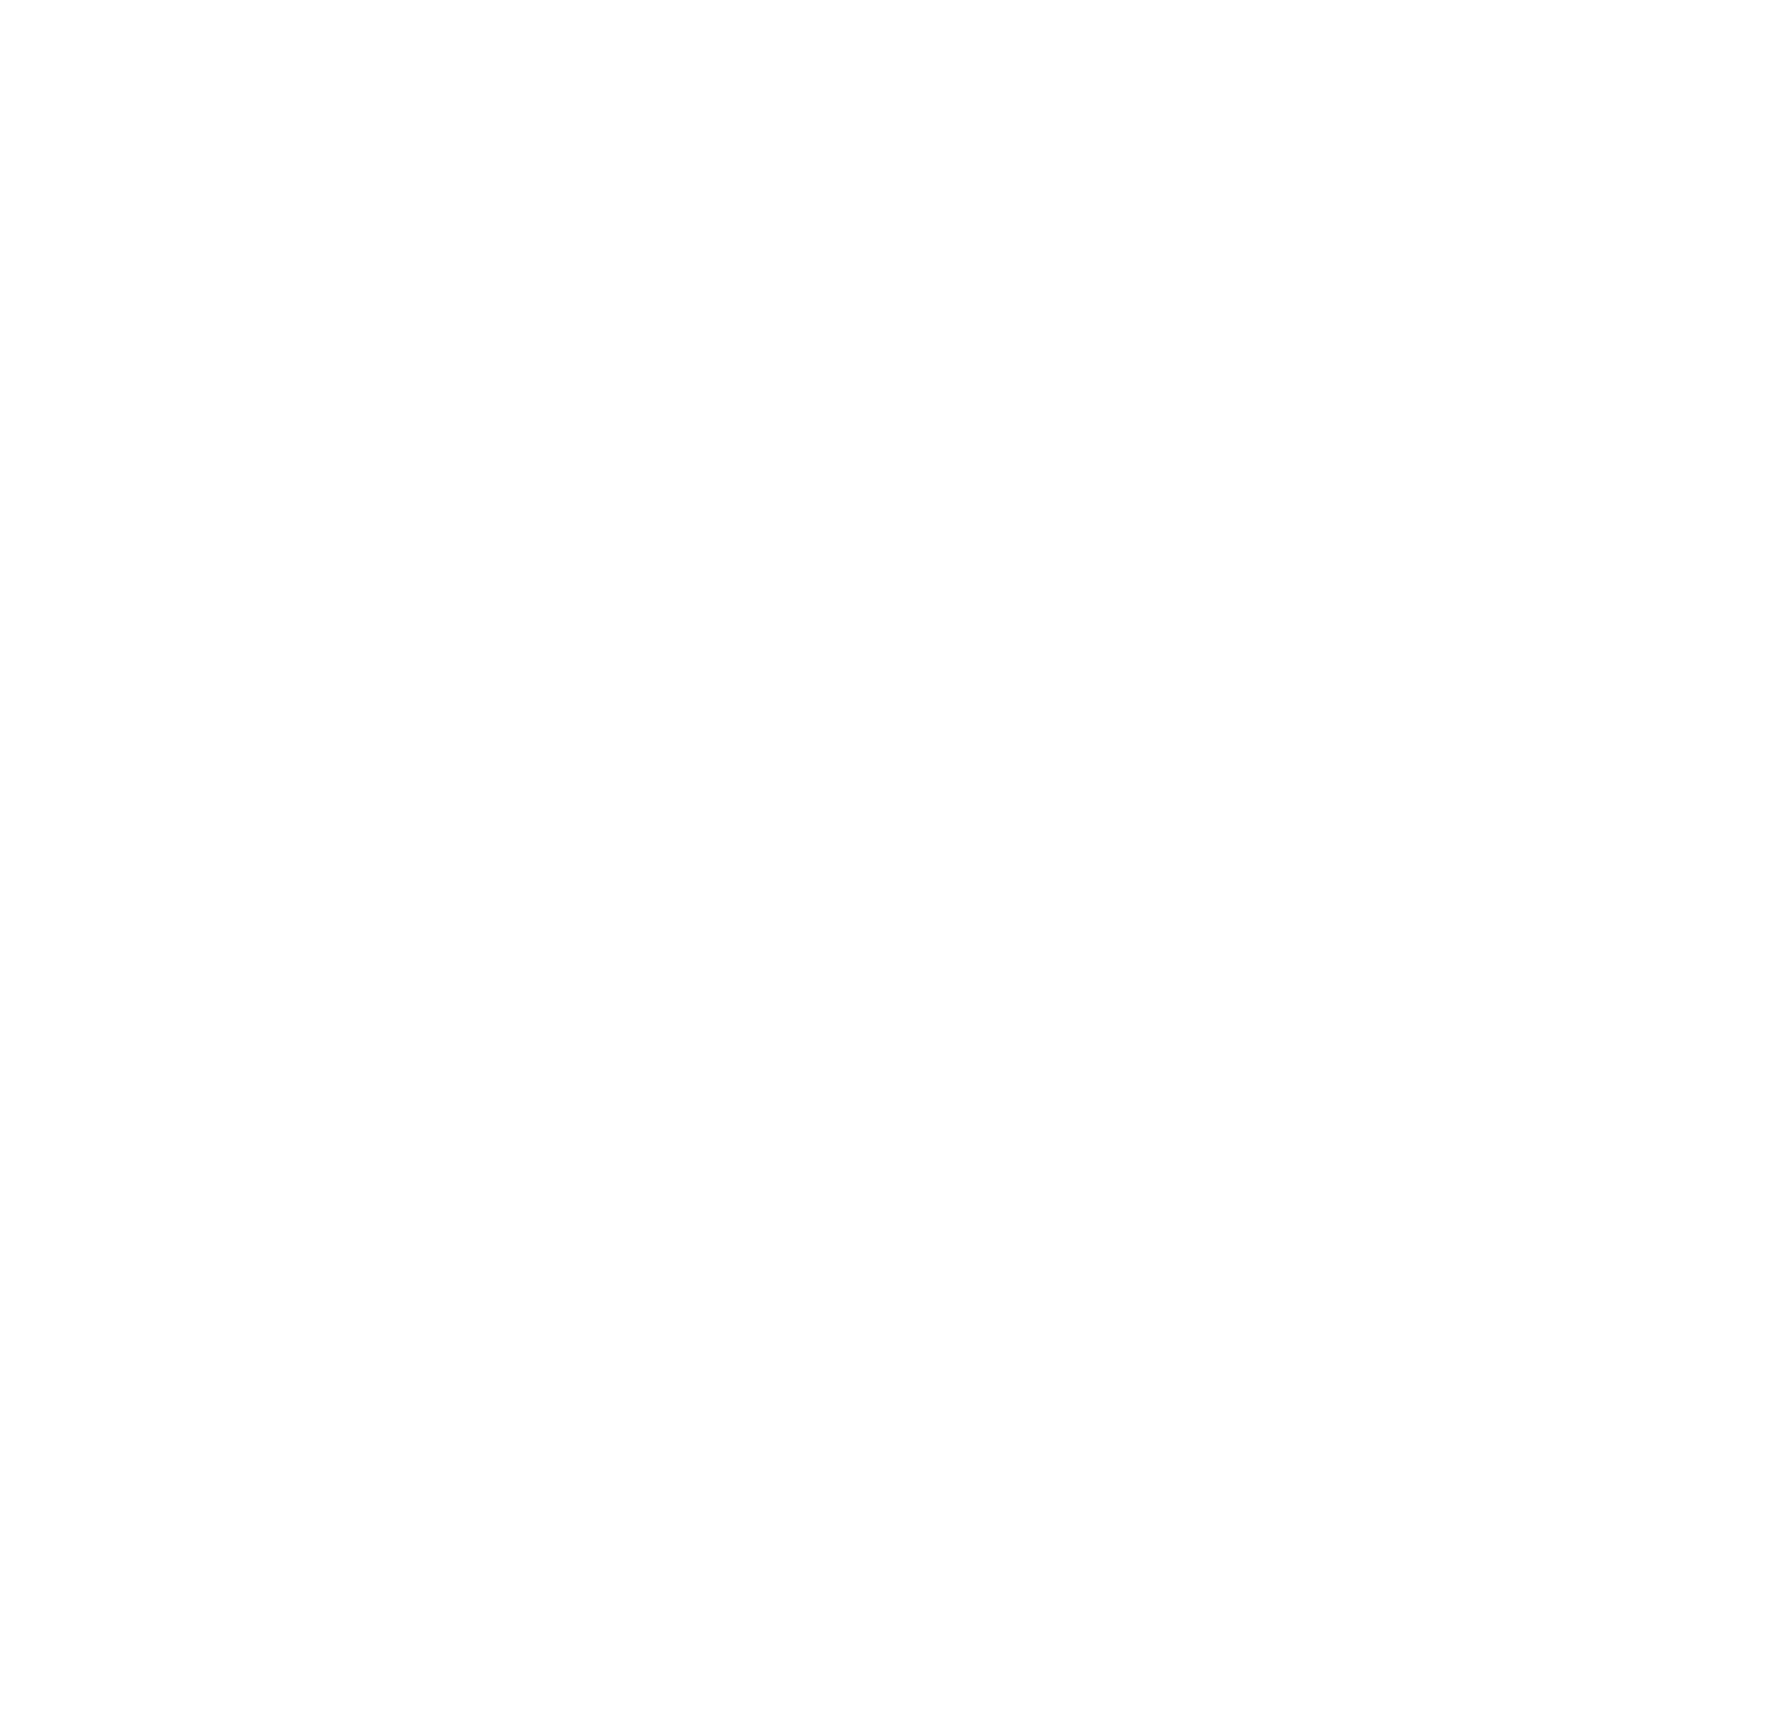 Blu companu logo white Nuovo2